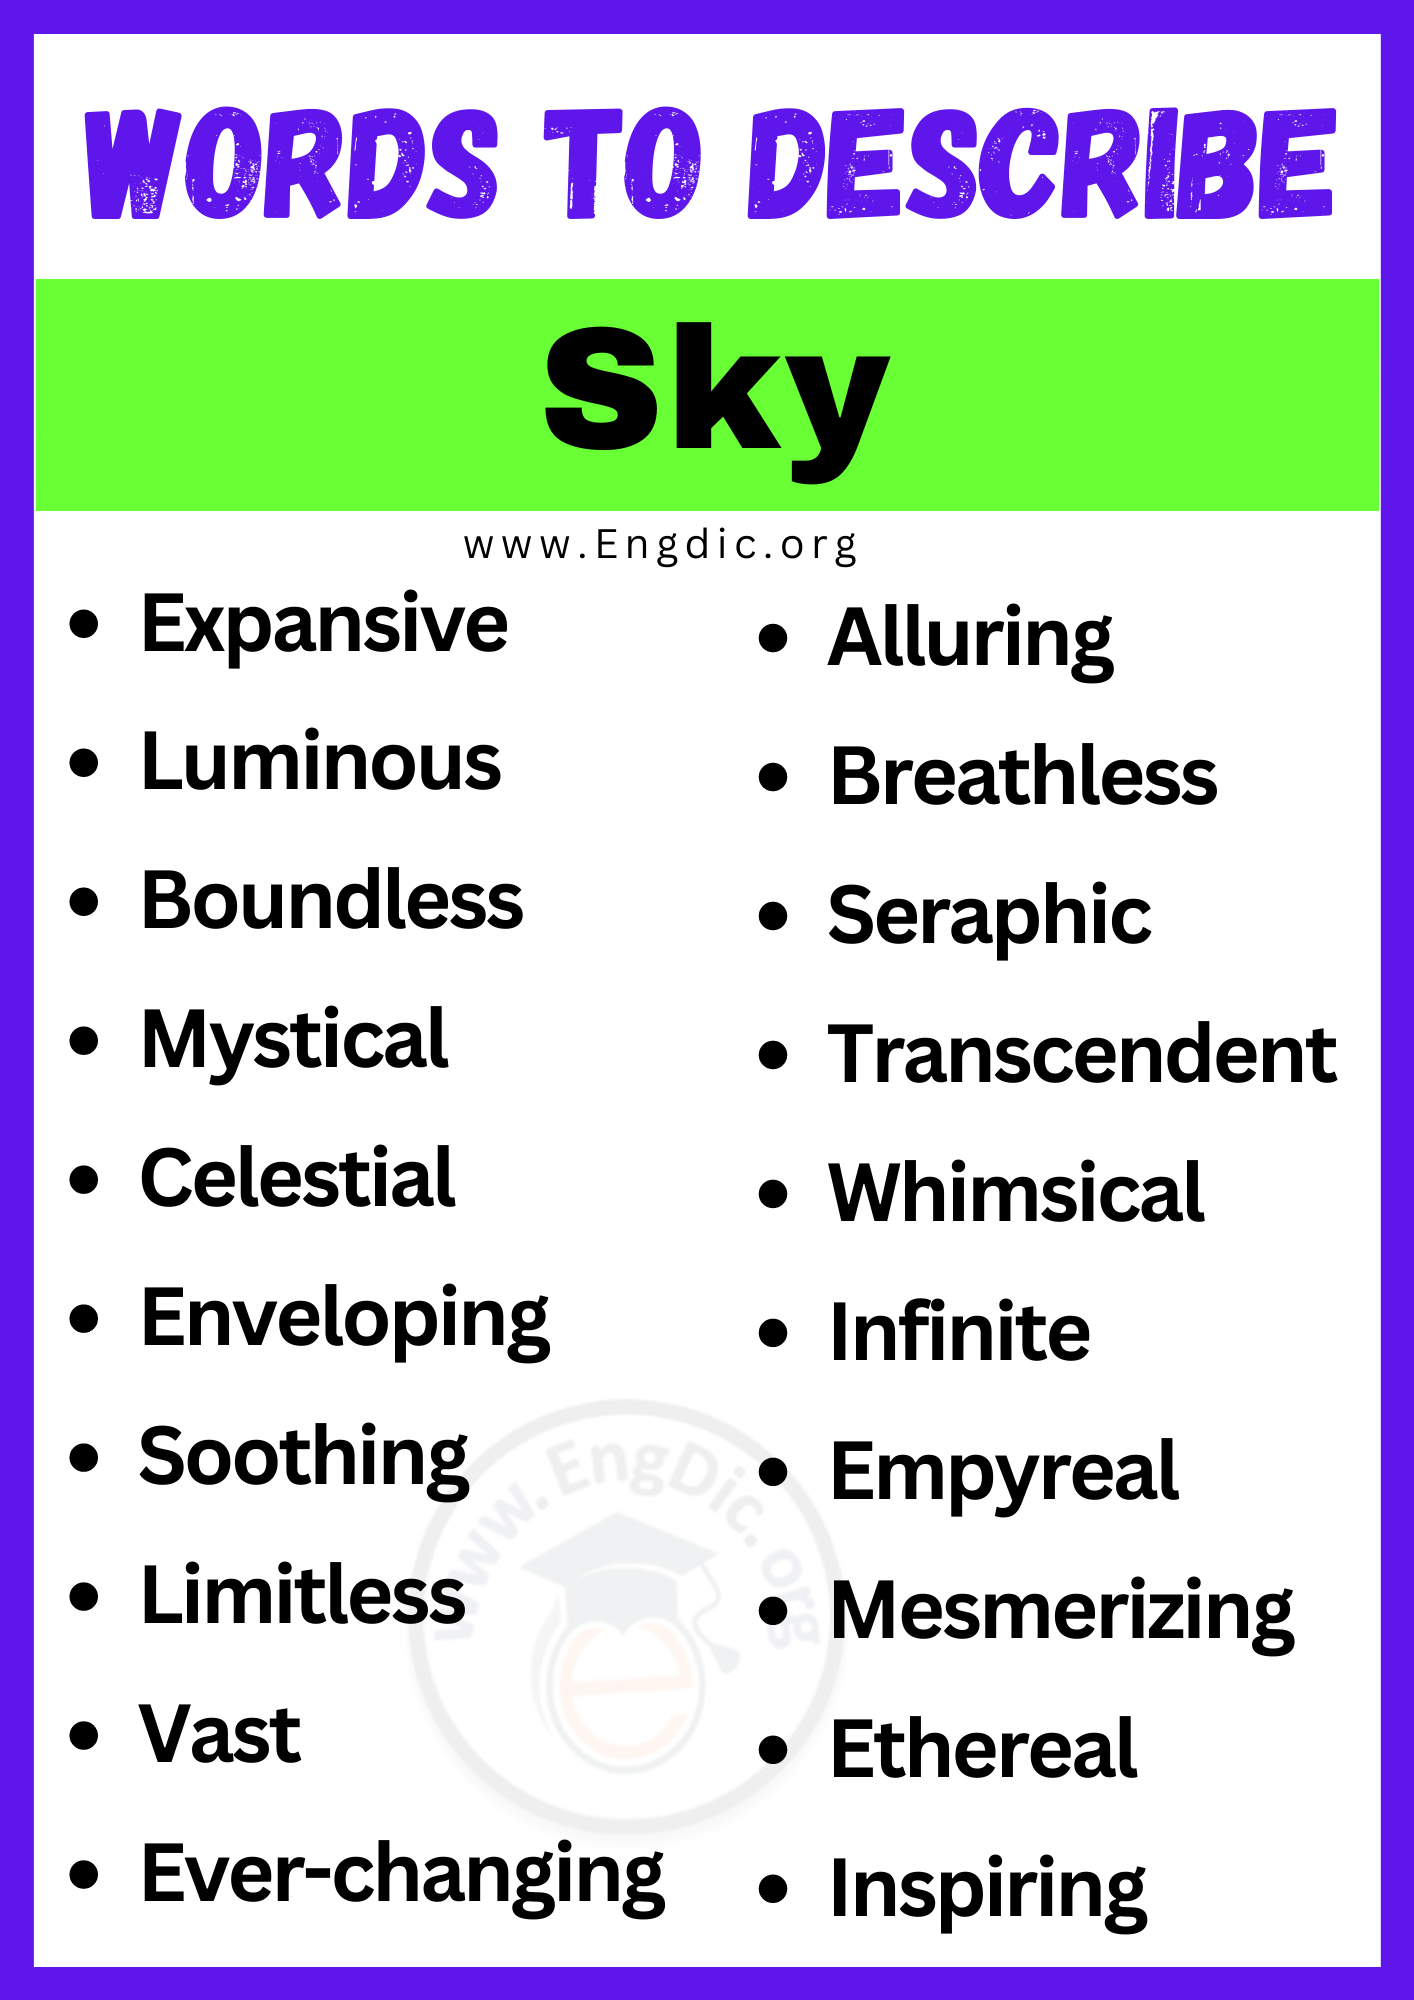 Words to Describe Sky